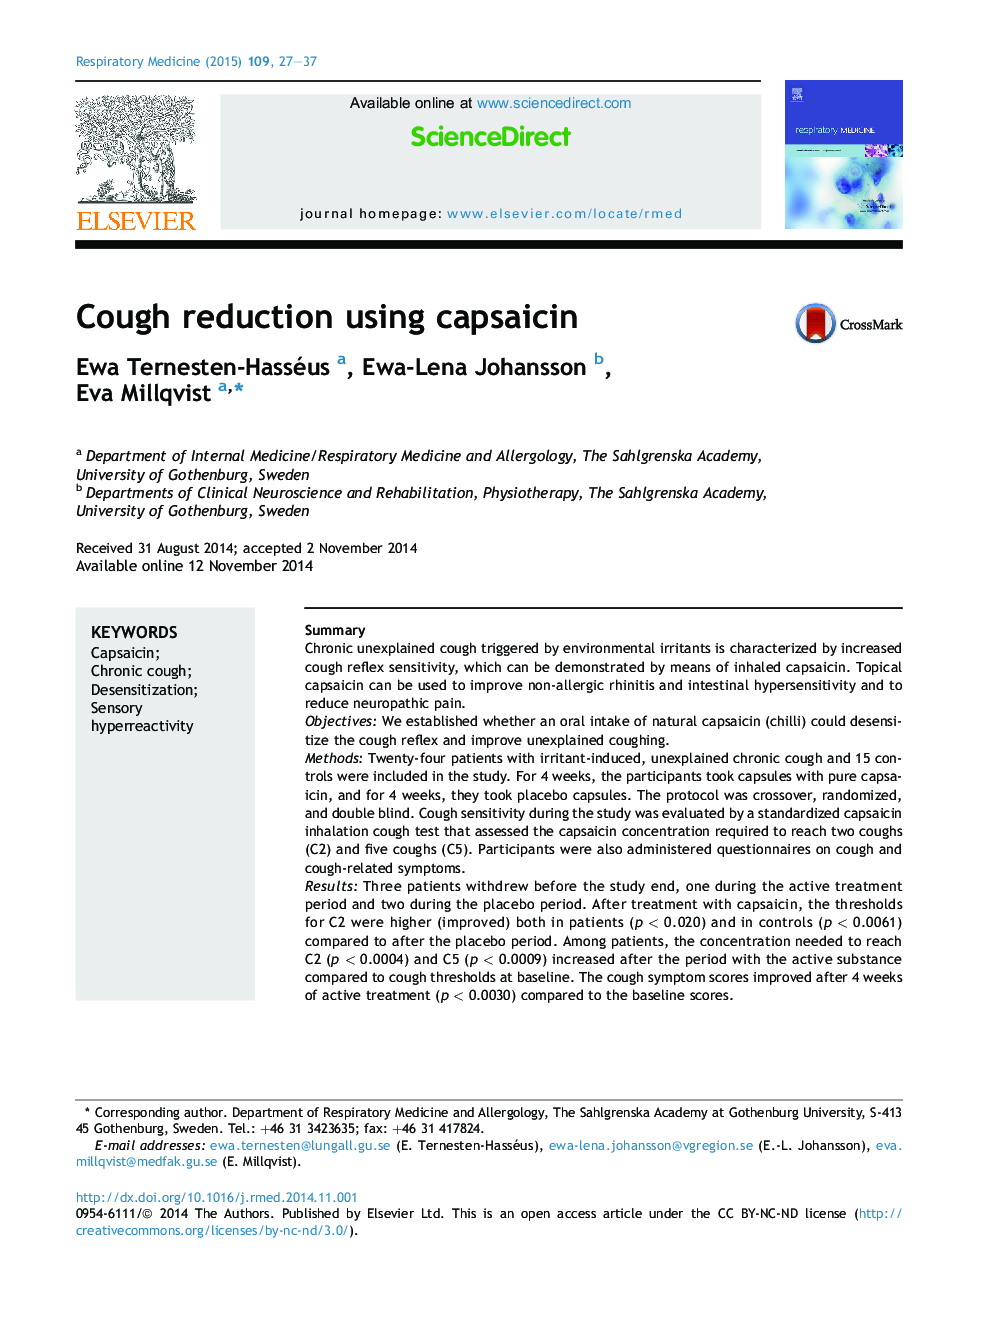 Cough reduction using capsaicin